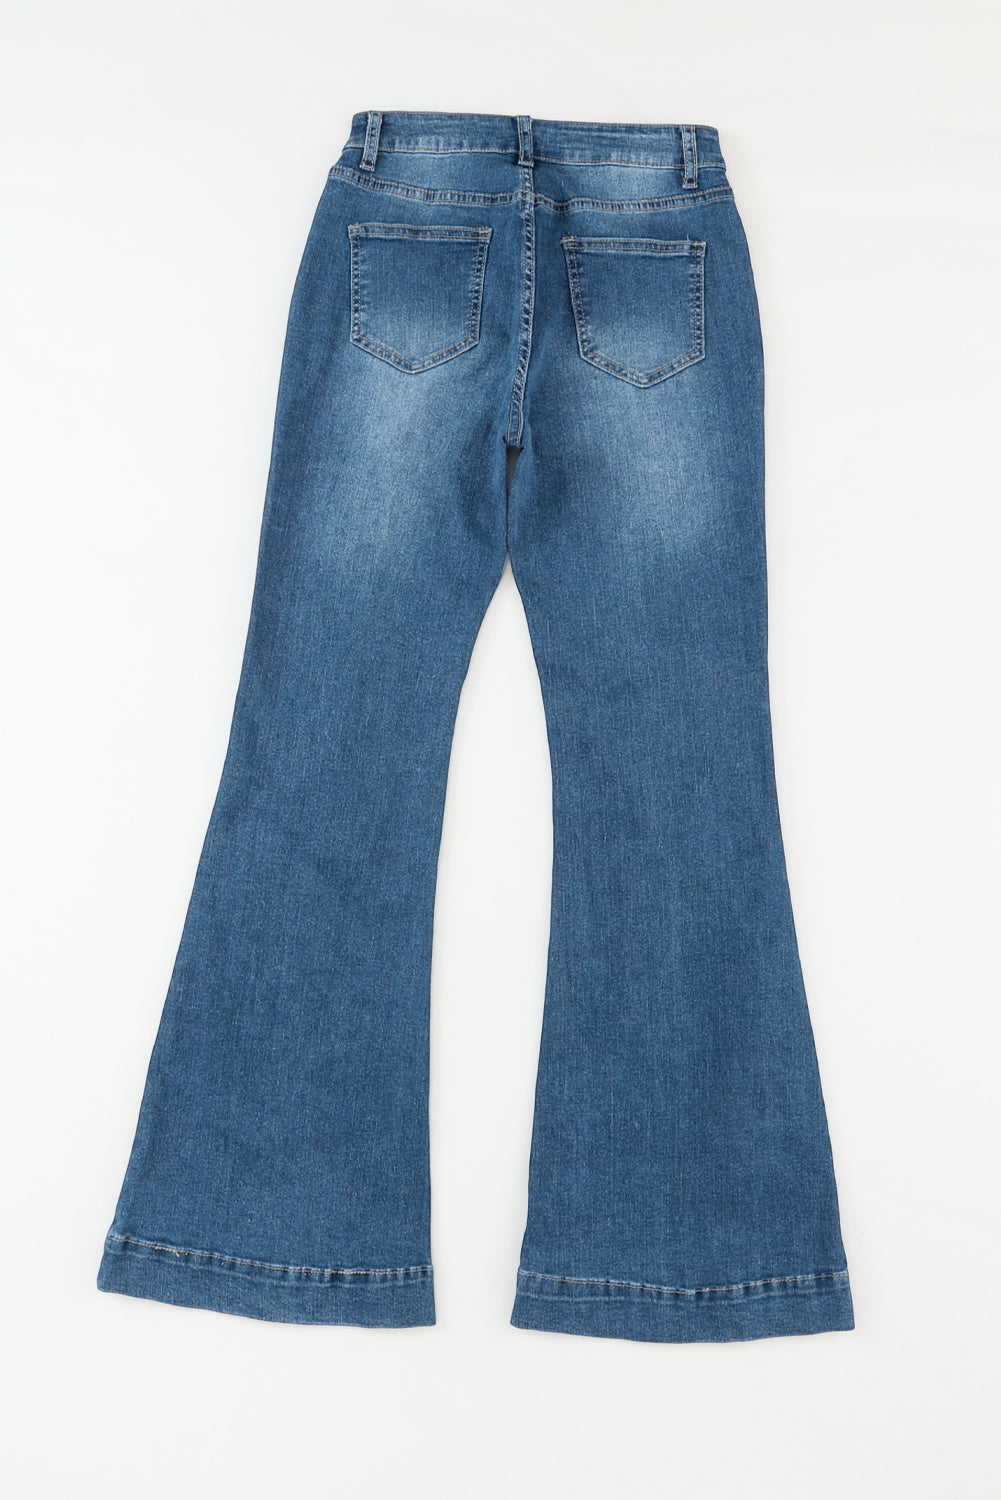 Blue High Waist Seam Stitching Pocket Flare Jeans-6